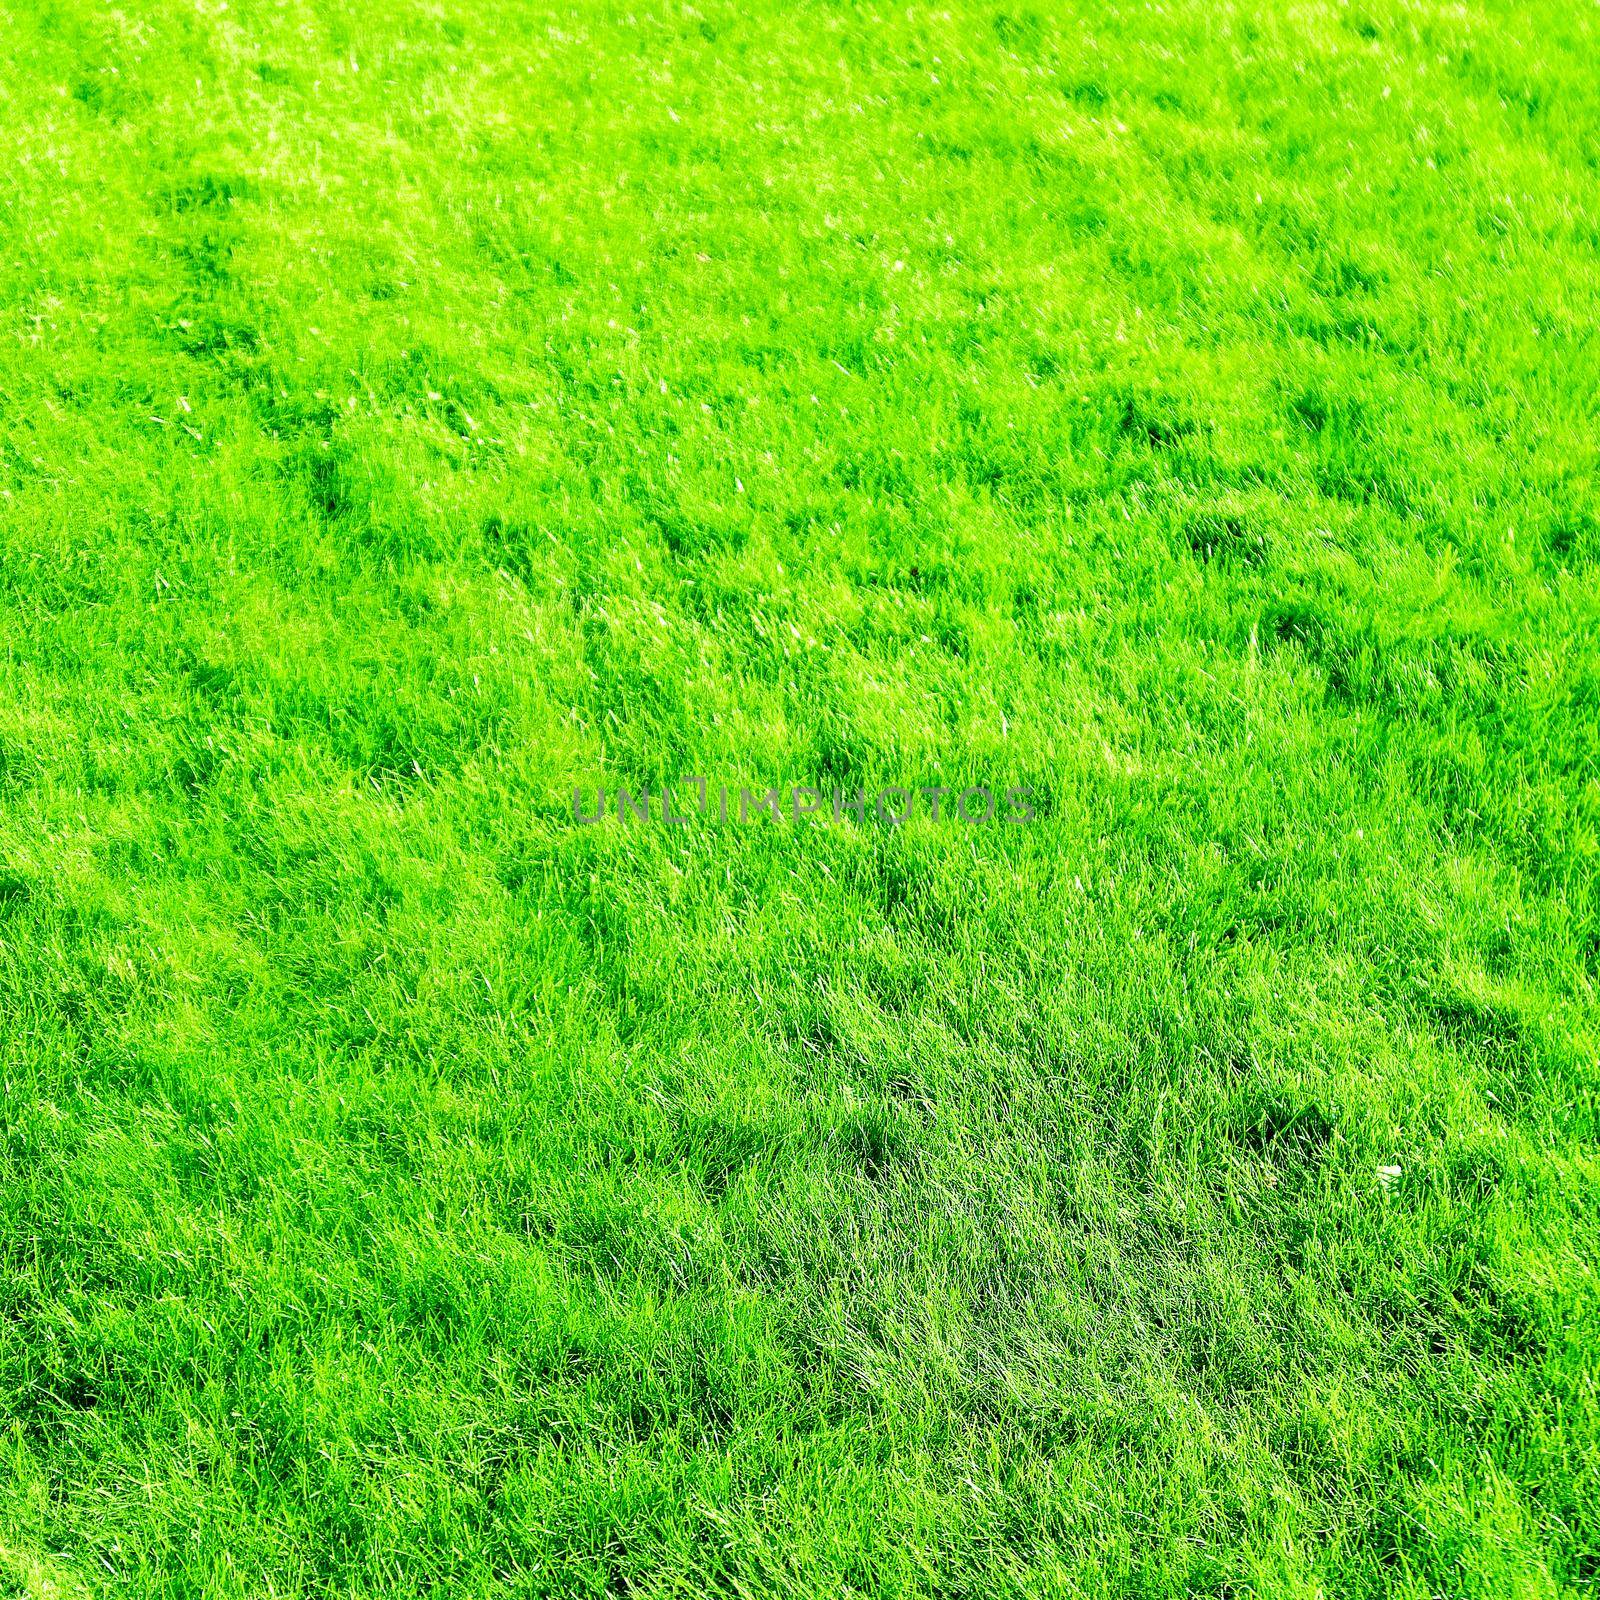 Nature, garden and golf landscape concept - Grass field background, perfect backyard lawn